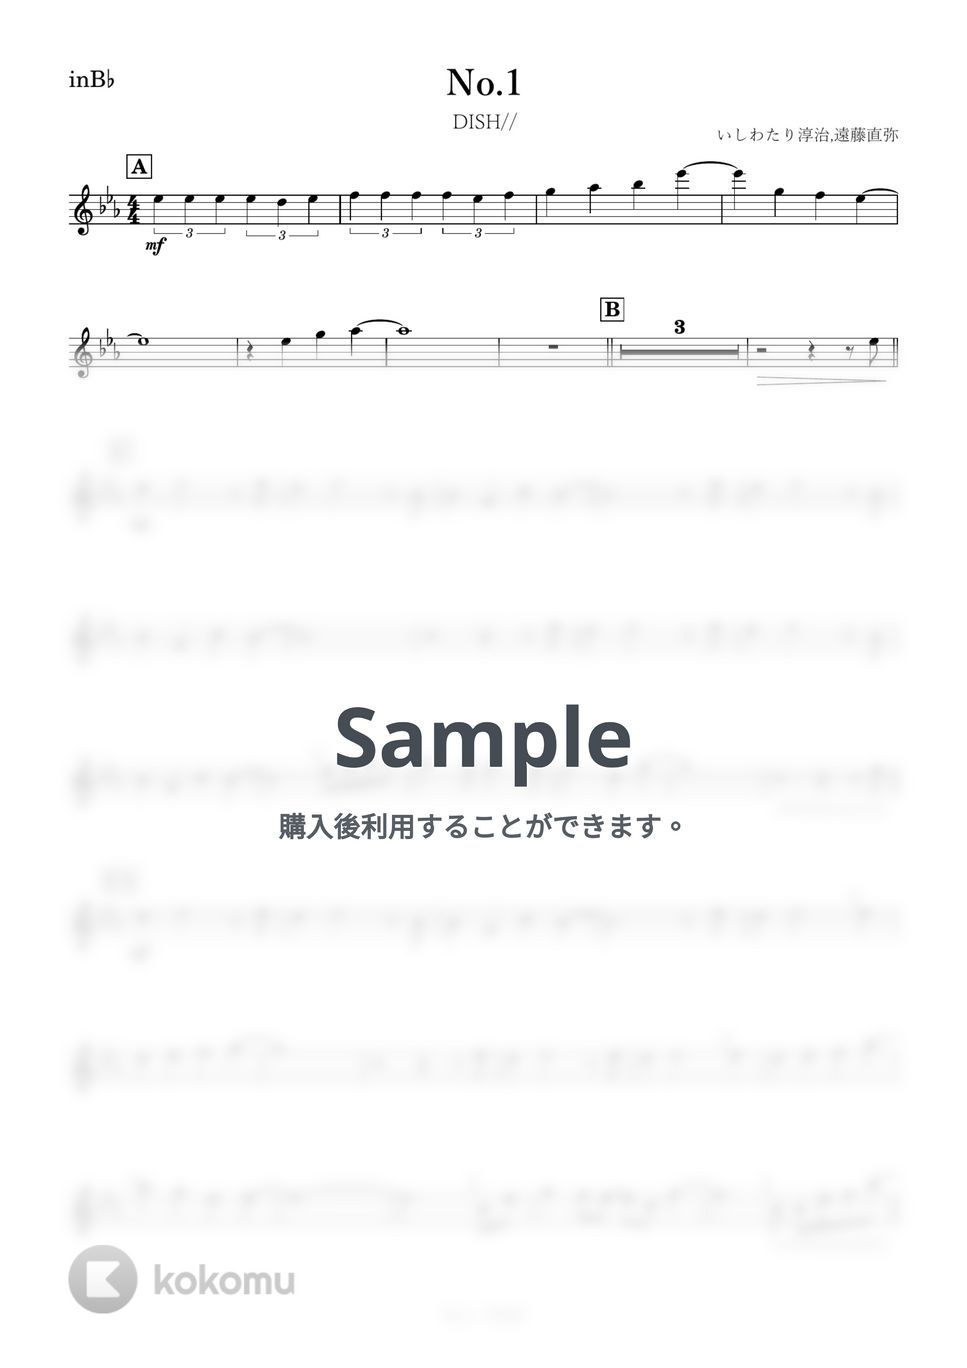 DISH// - NO.1 (B♭) by kanamusic